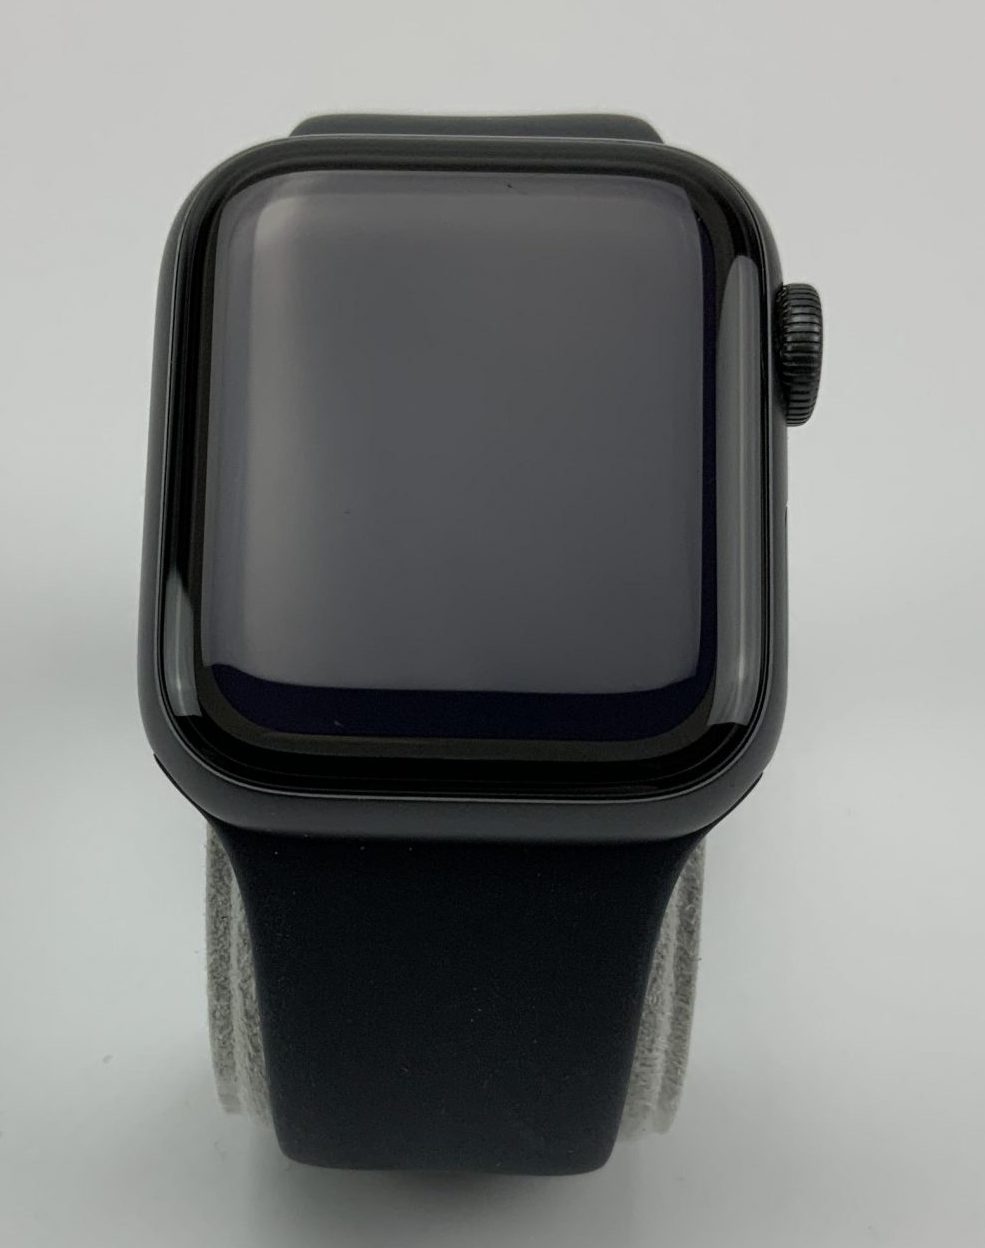 Watch Series 5 Aluminum Cellular (40mm), Space Gray, bild 1